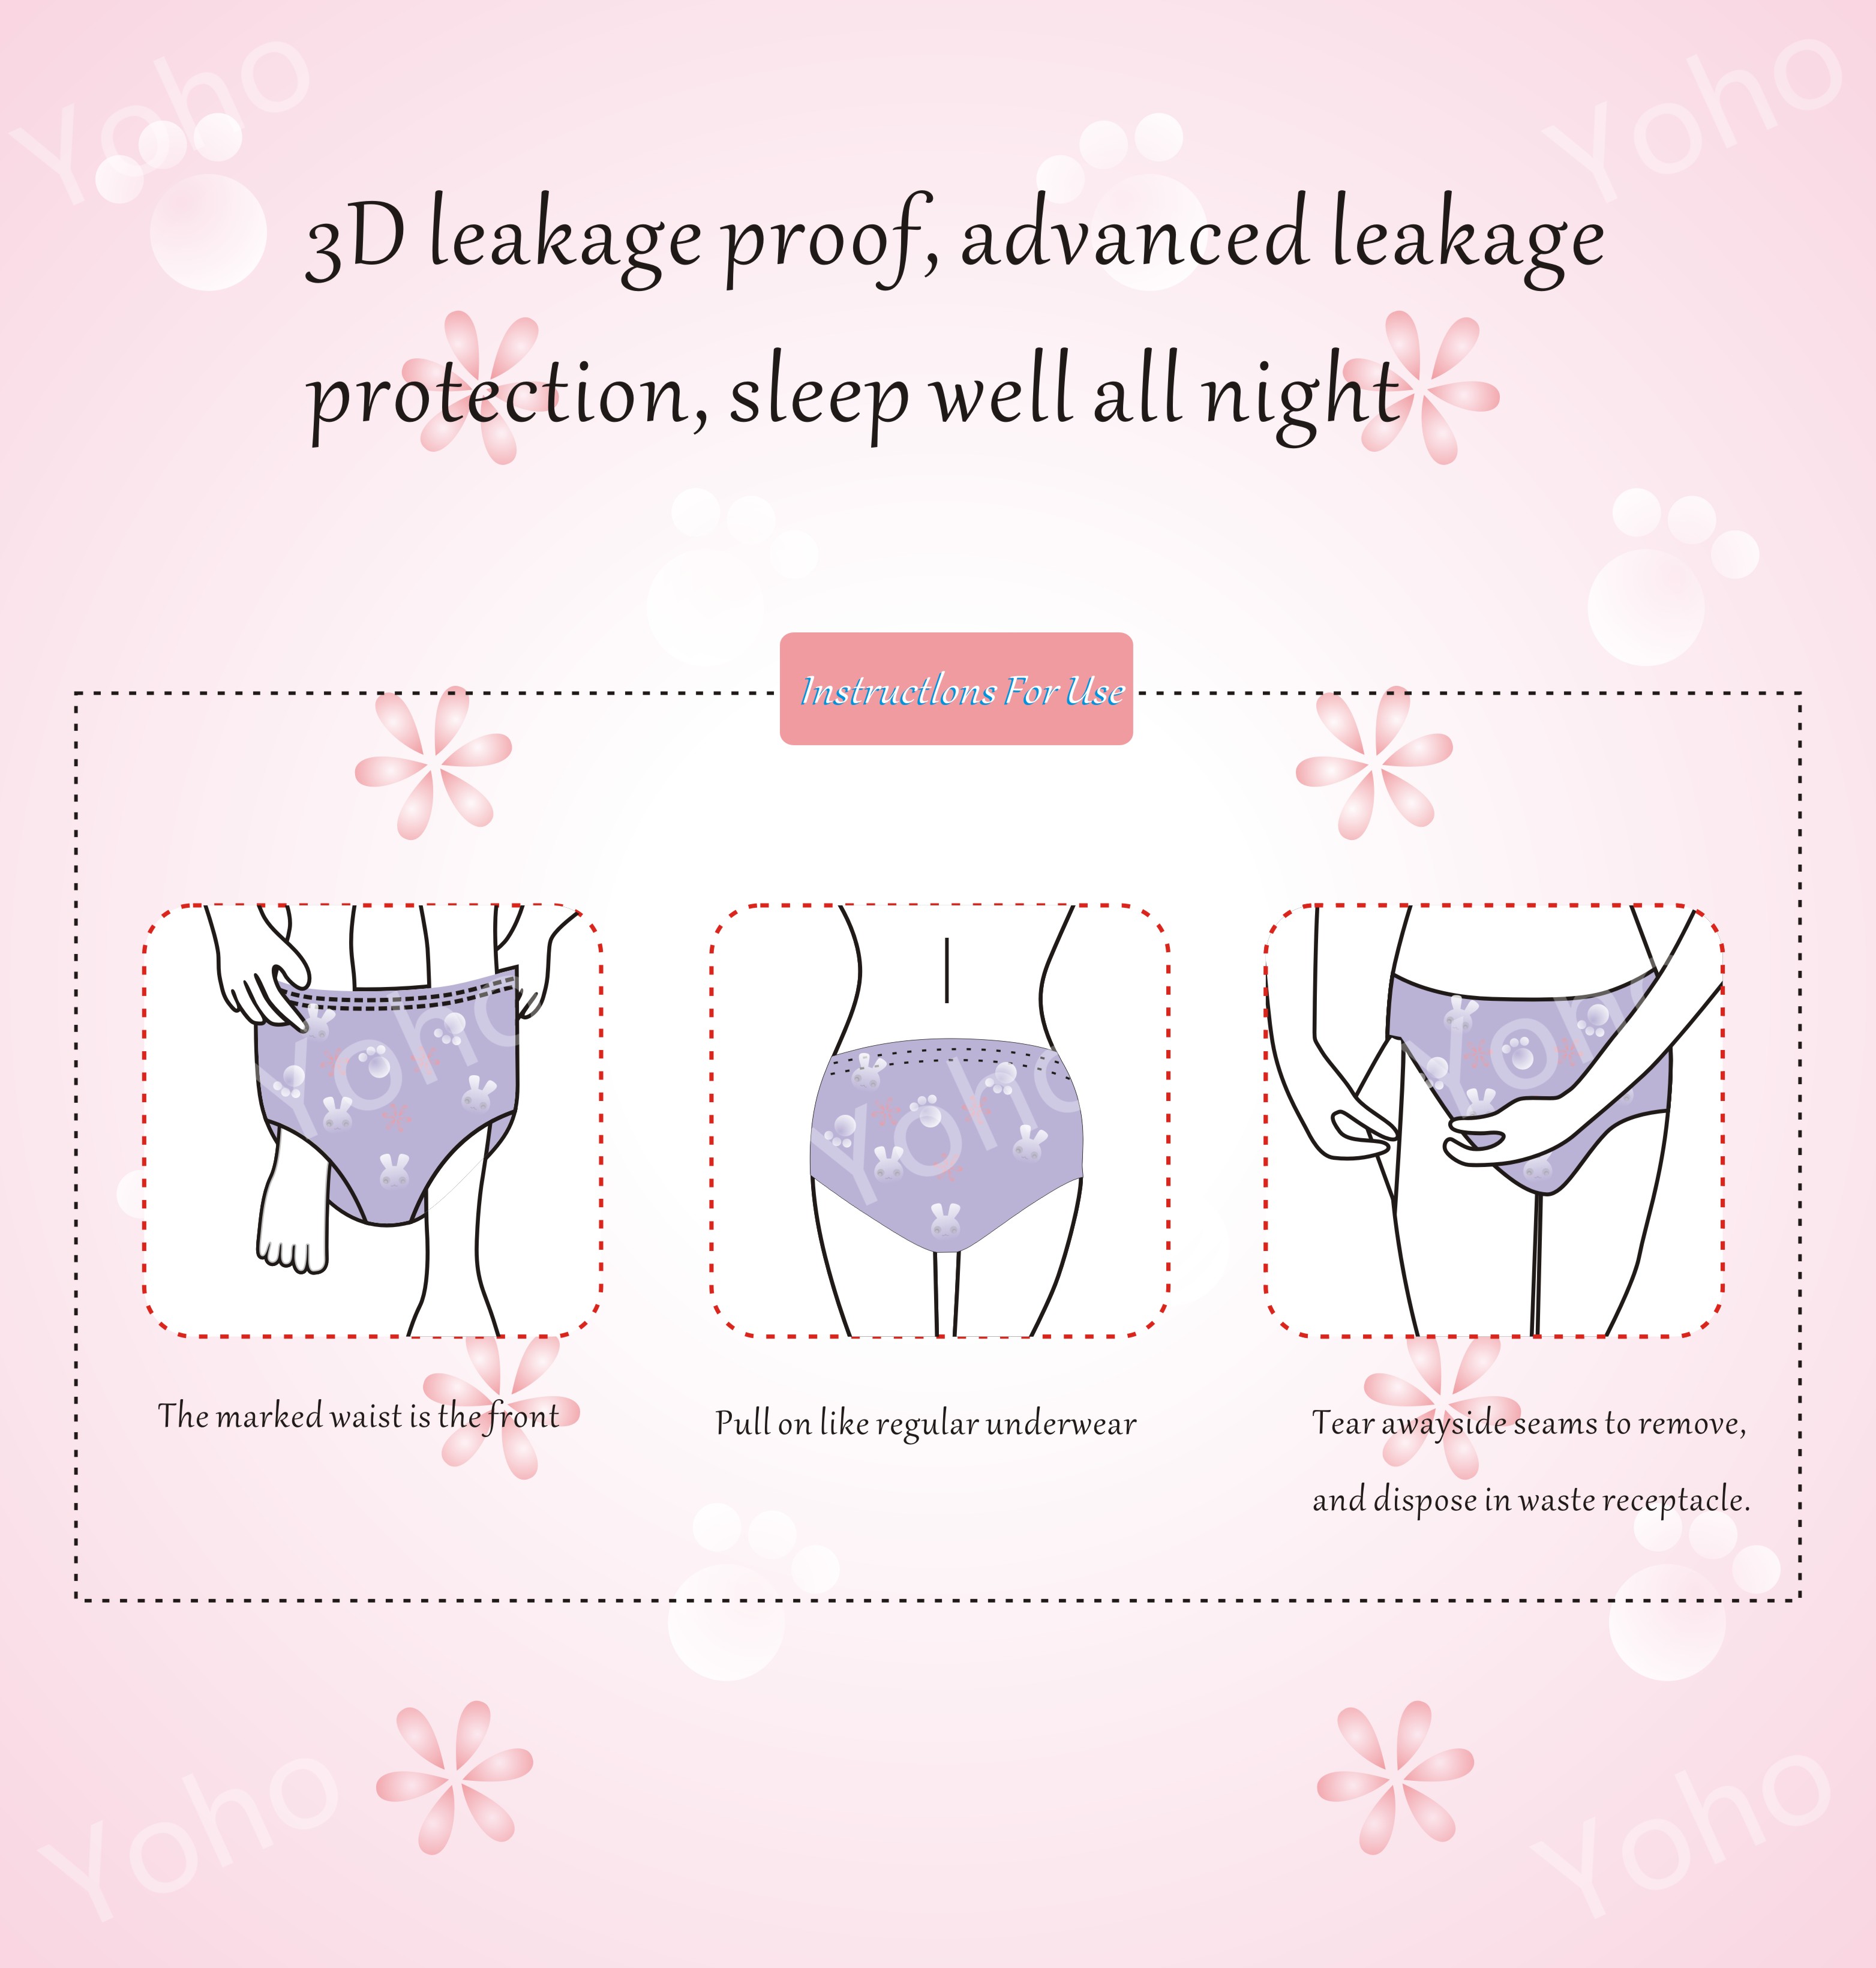 Best sells female period pants women menstrual napkins